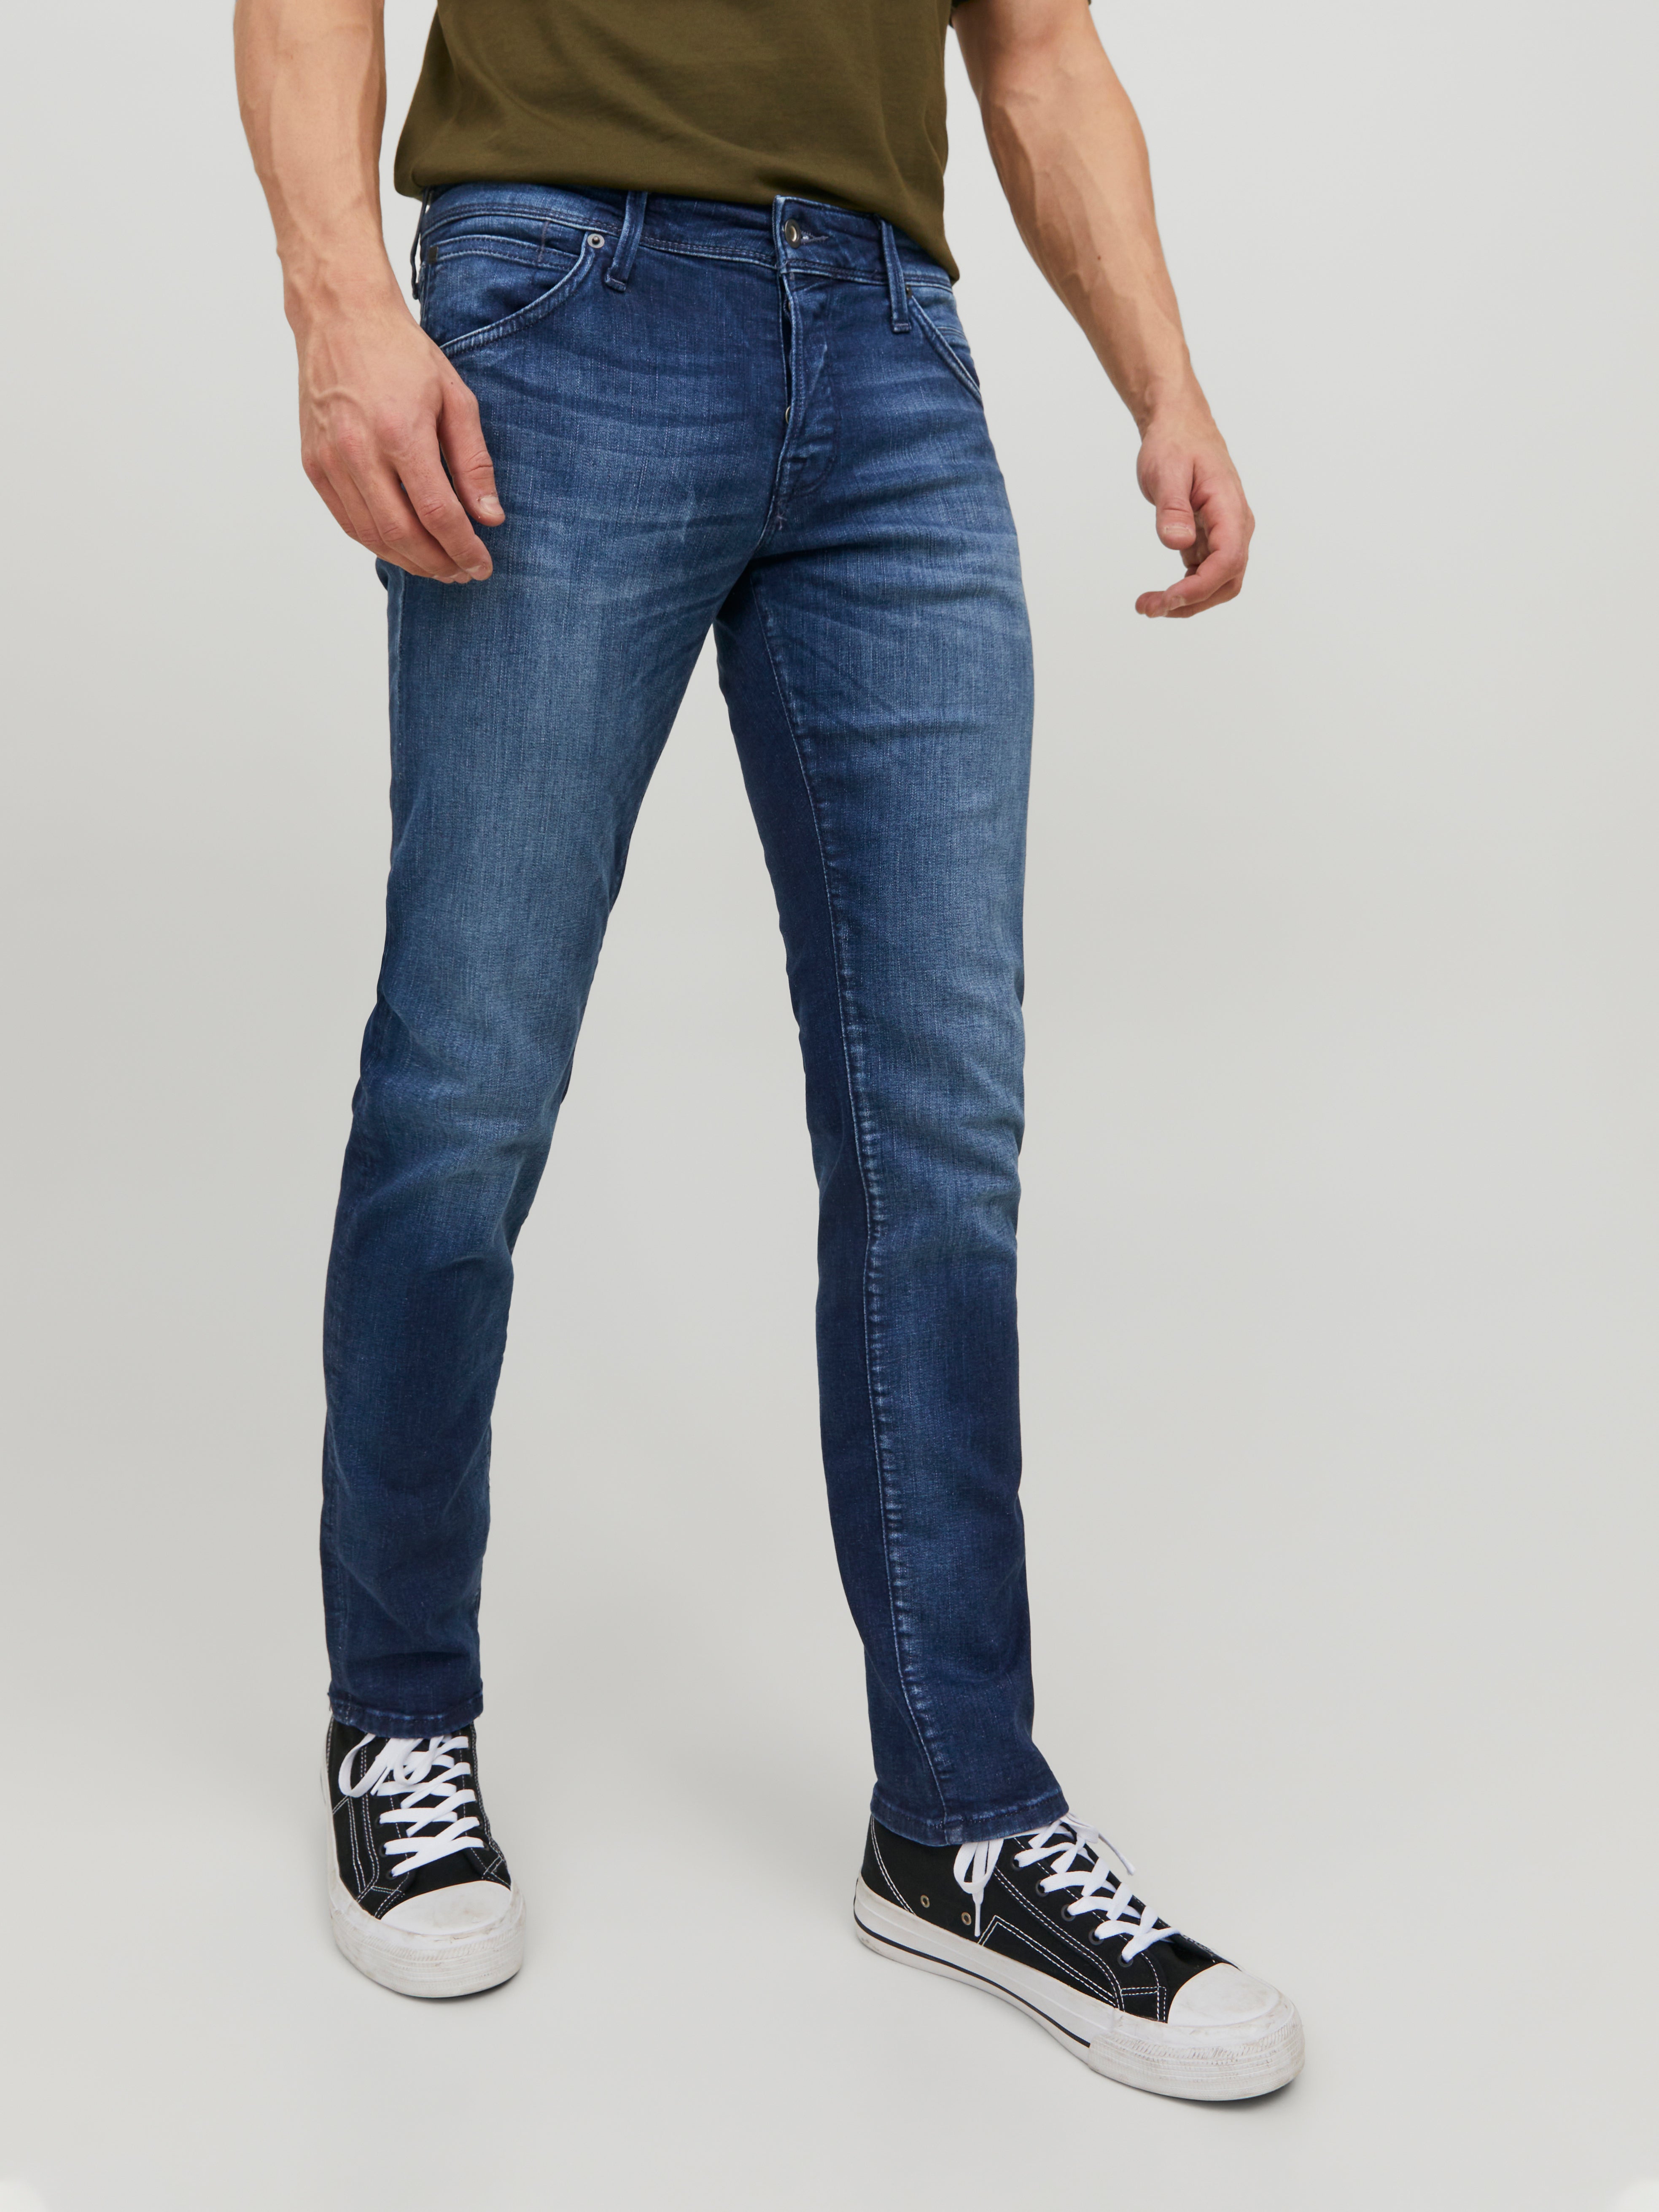 TOM TAILOR DENIM PIERS STRETCH - Slim fit jeans - mid stone wash denim  blue/light blue - Zalando.ie